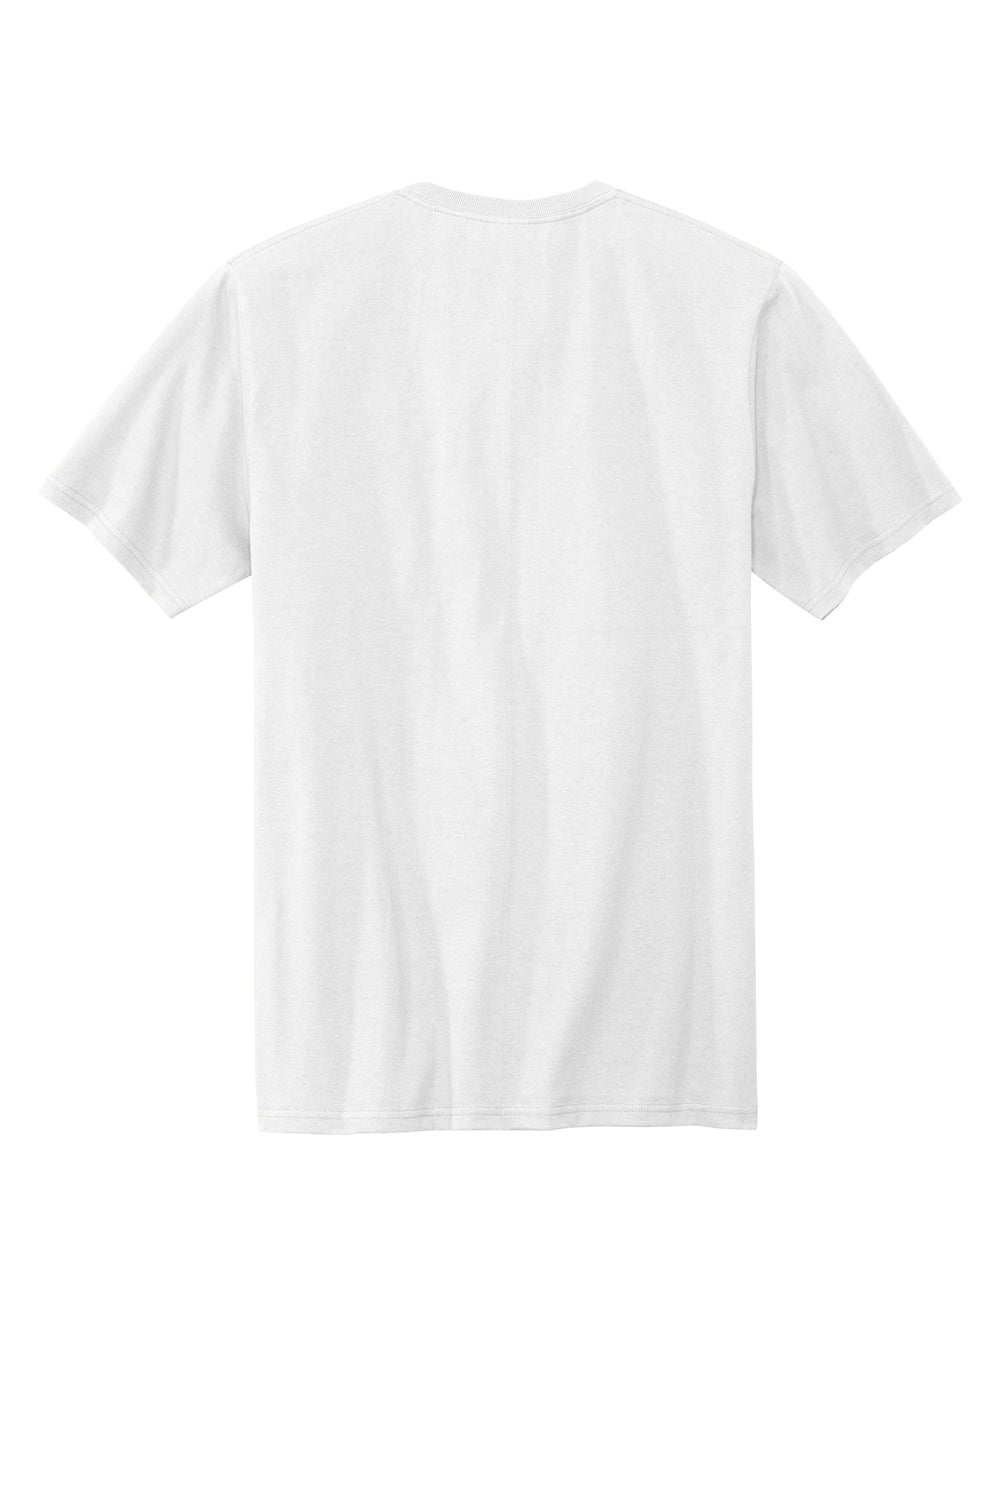 Volunteer Knitwear VL100 USA Made All American Short Sleeve Crewneck T-Shirts White Flat Back